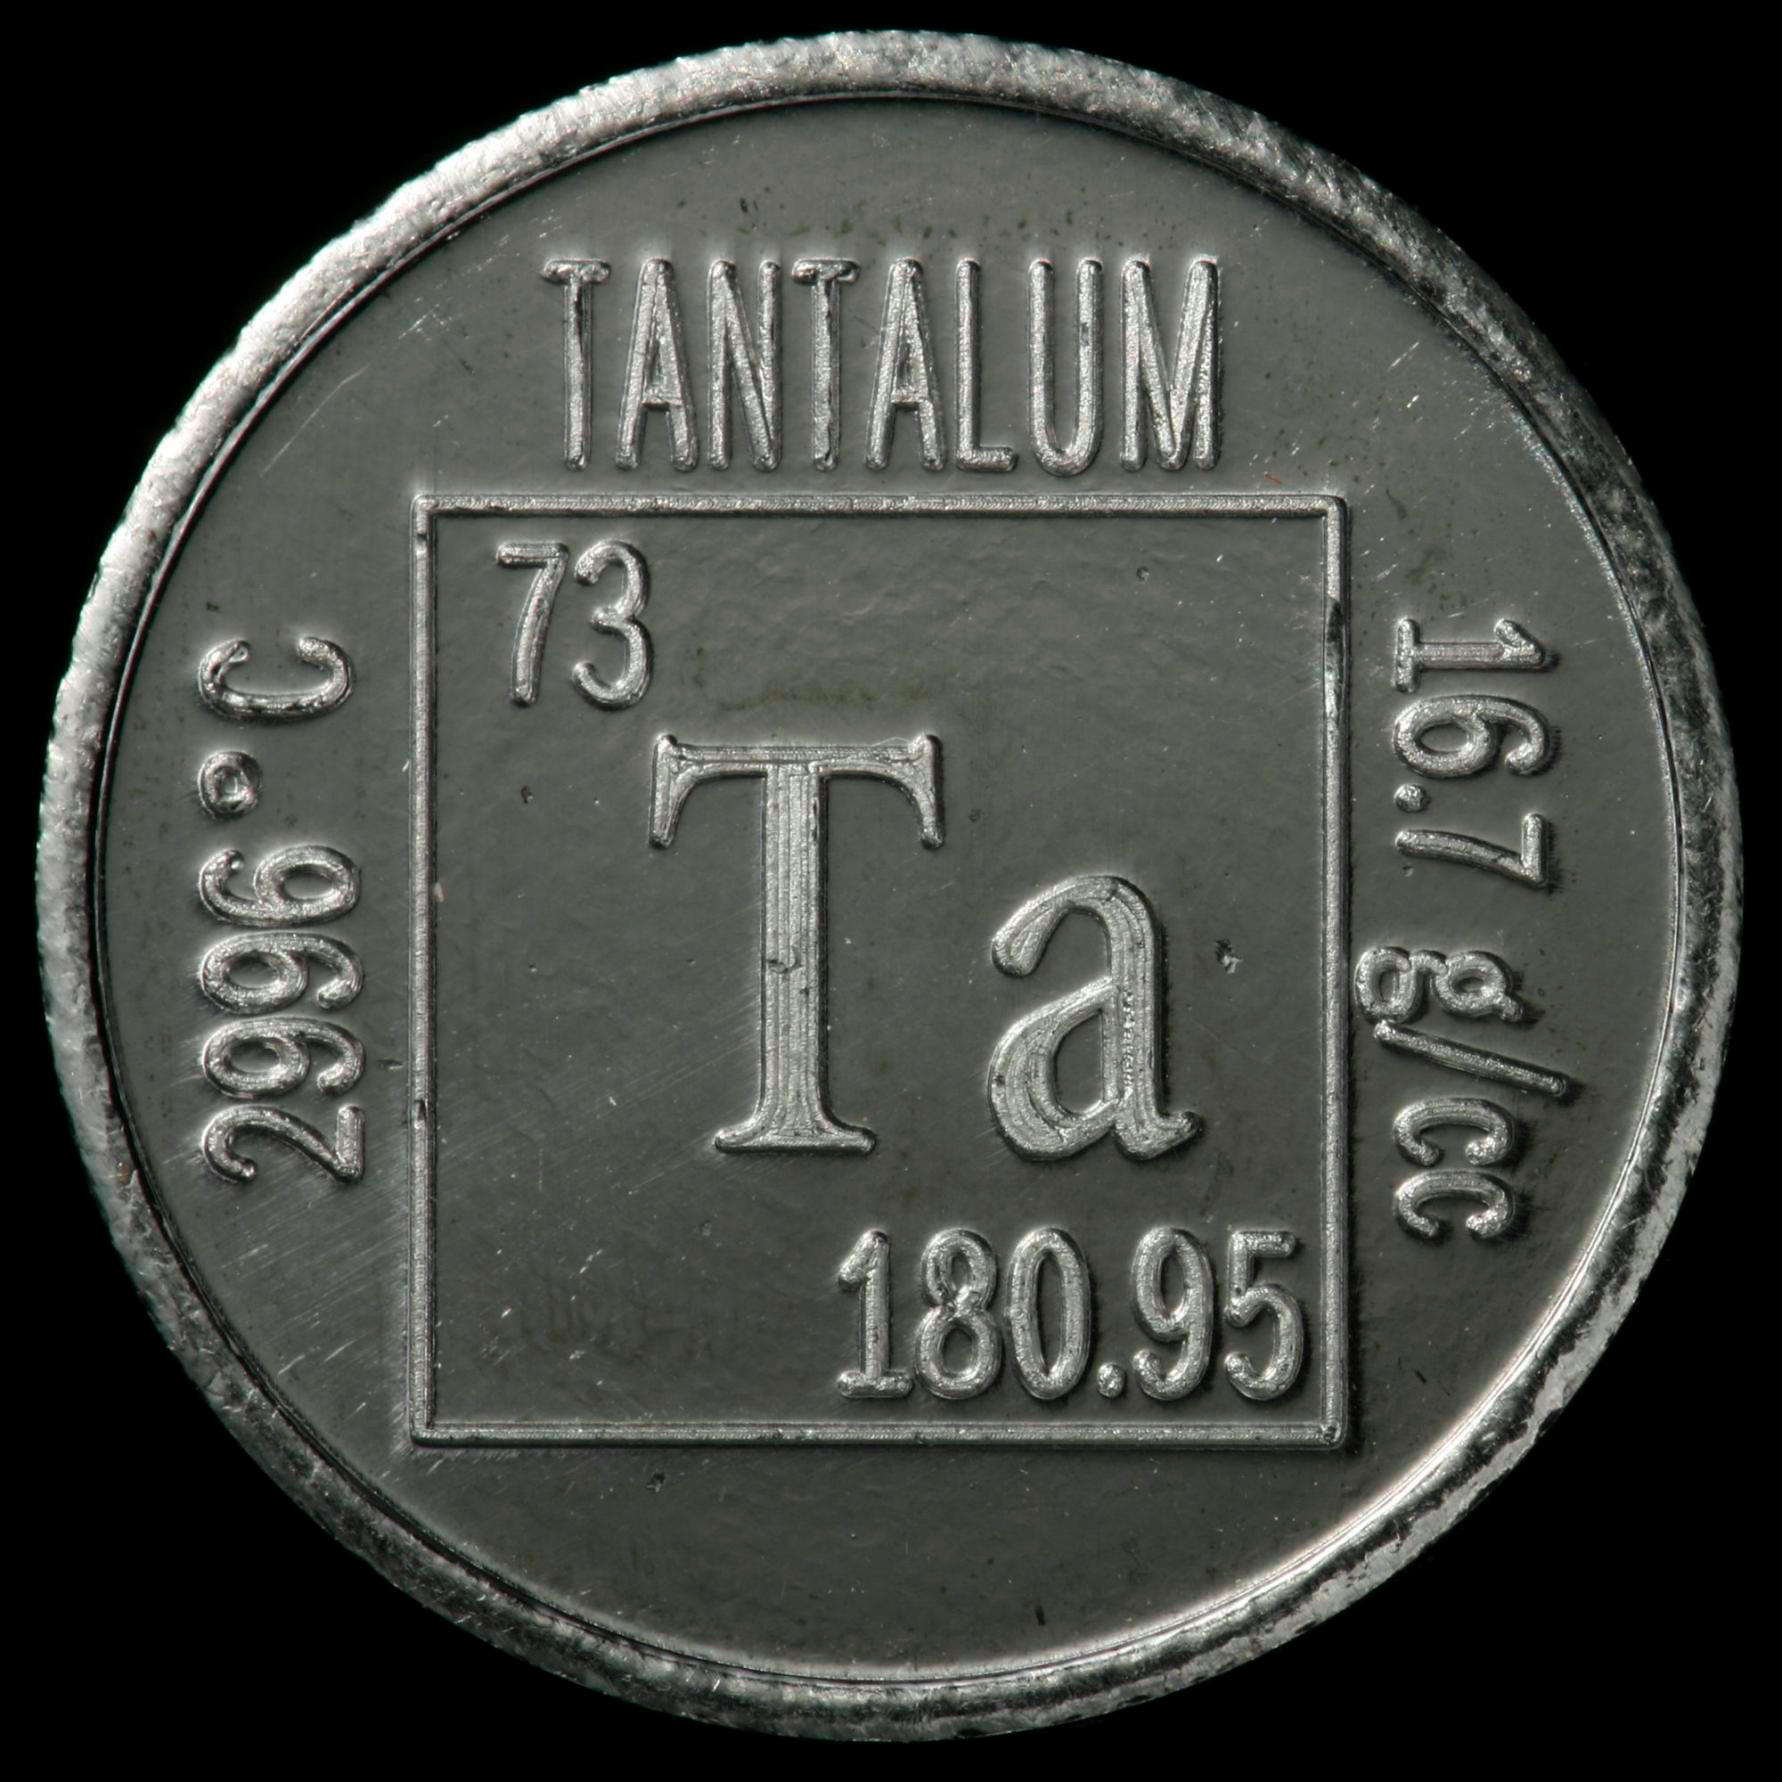 Tantalum Element coin